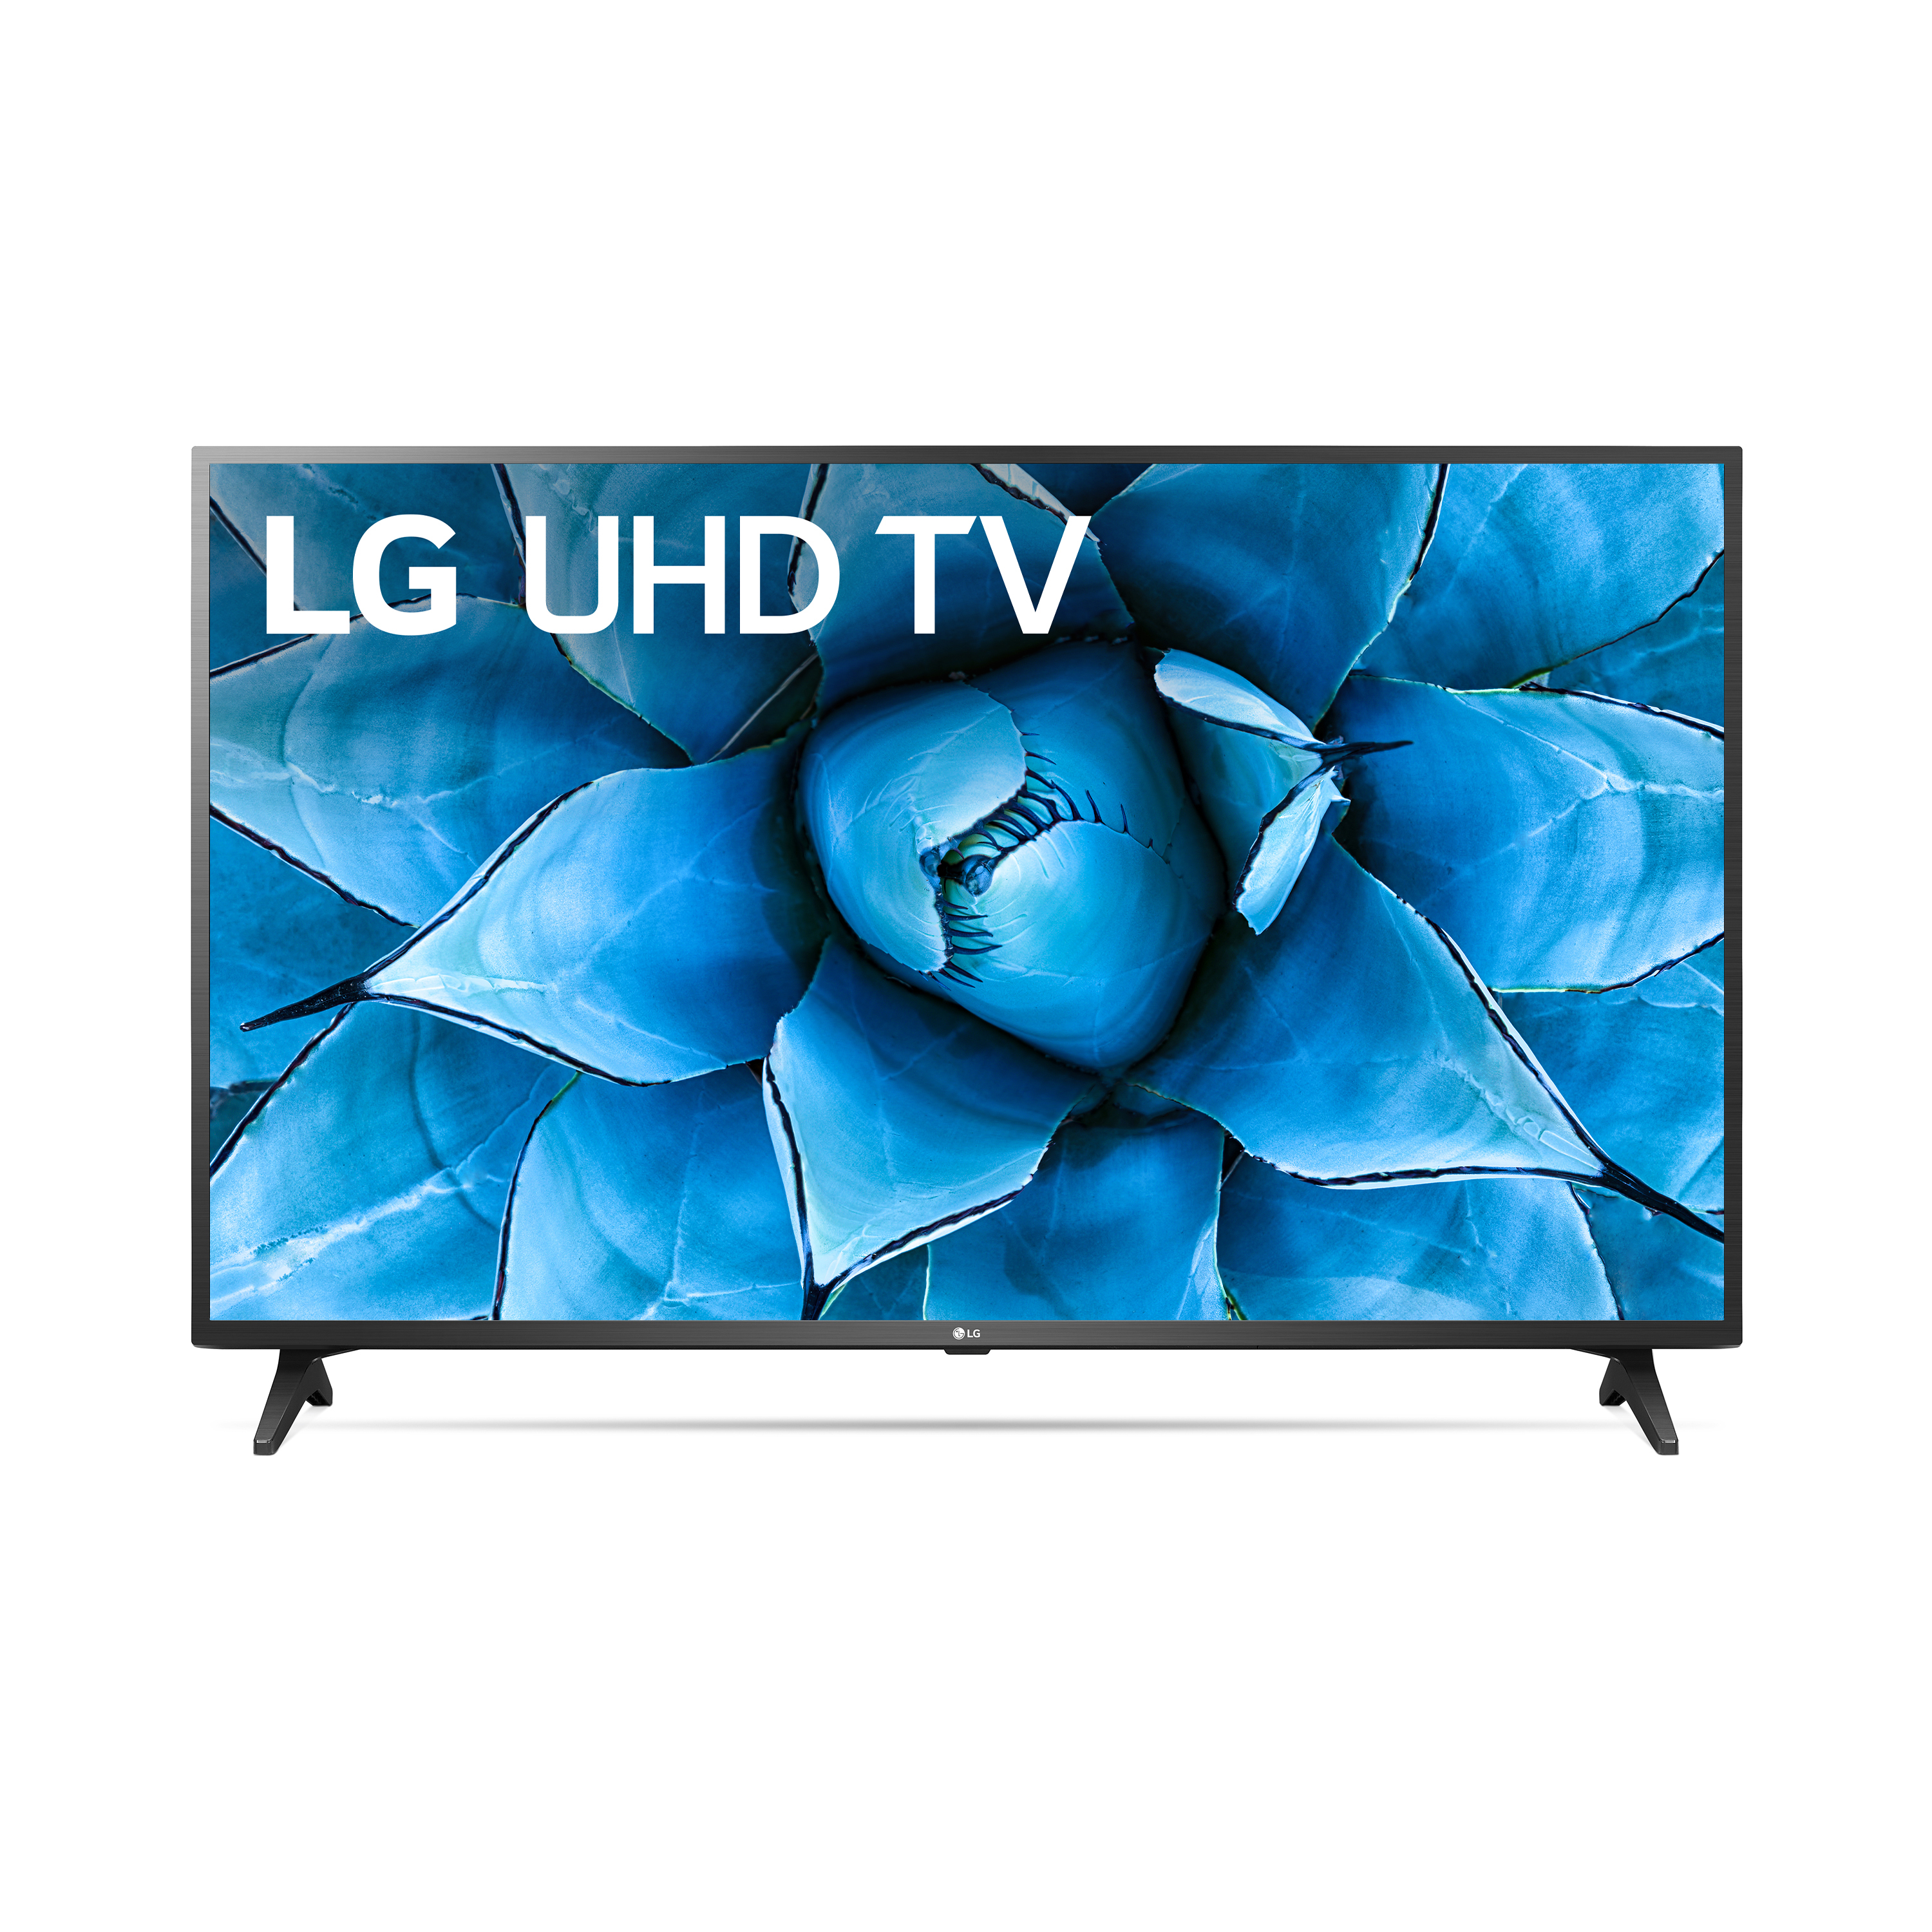 LG 65" Class 4K UHD 2160P Smart TV 65UN7300PUF 2020 Model - image 1 of 28